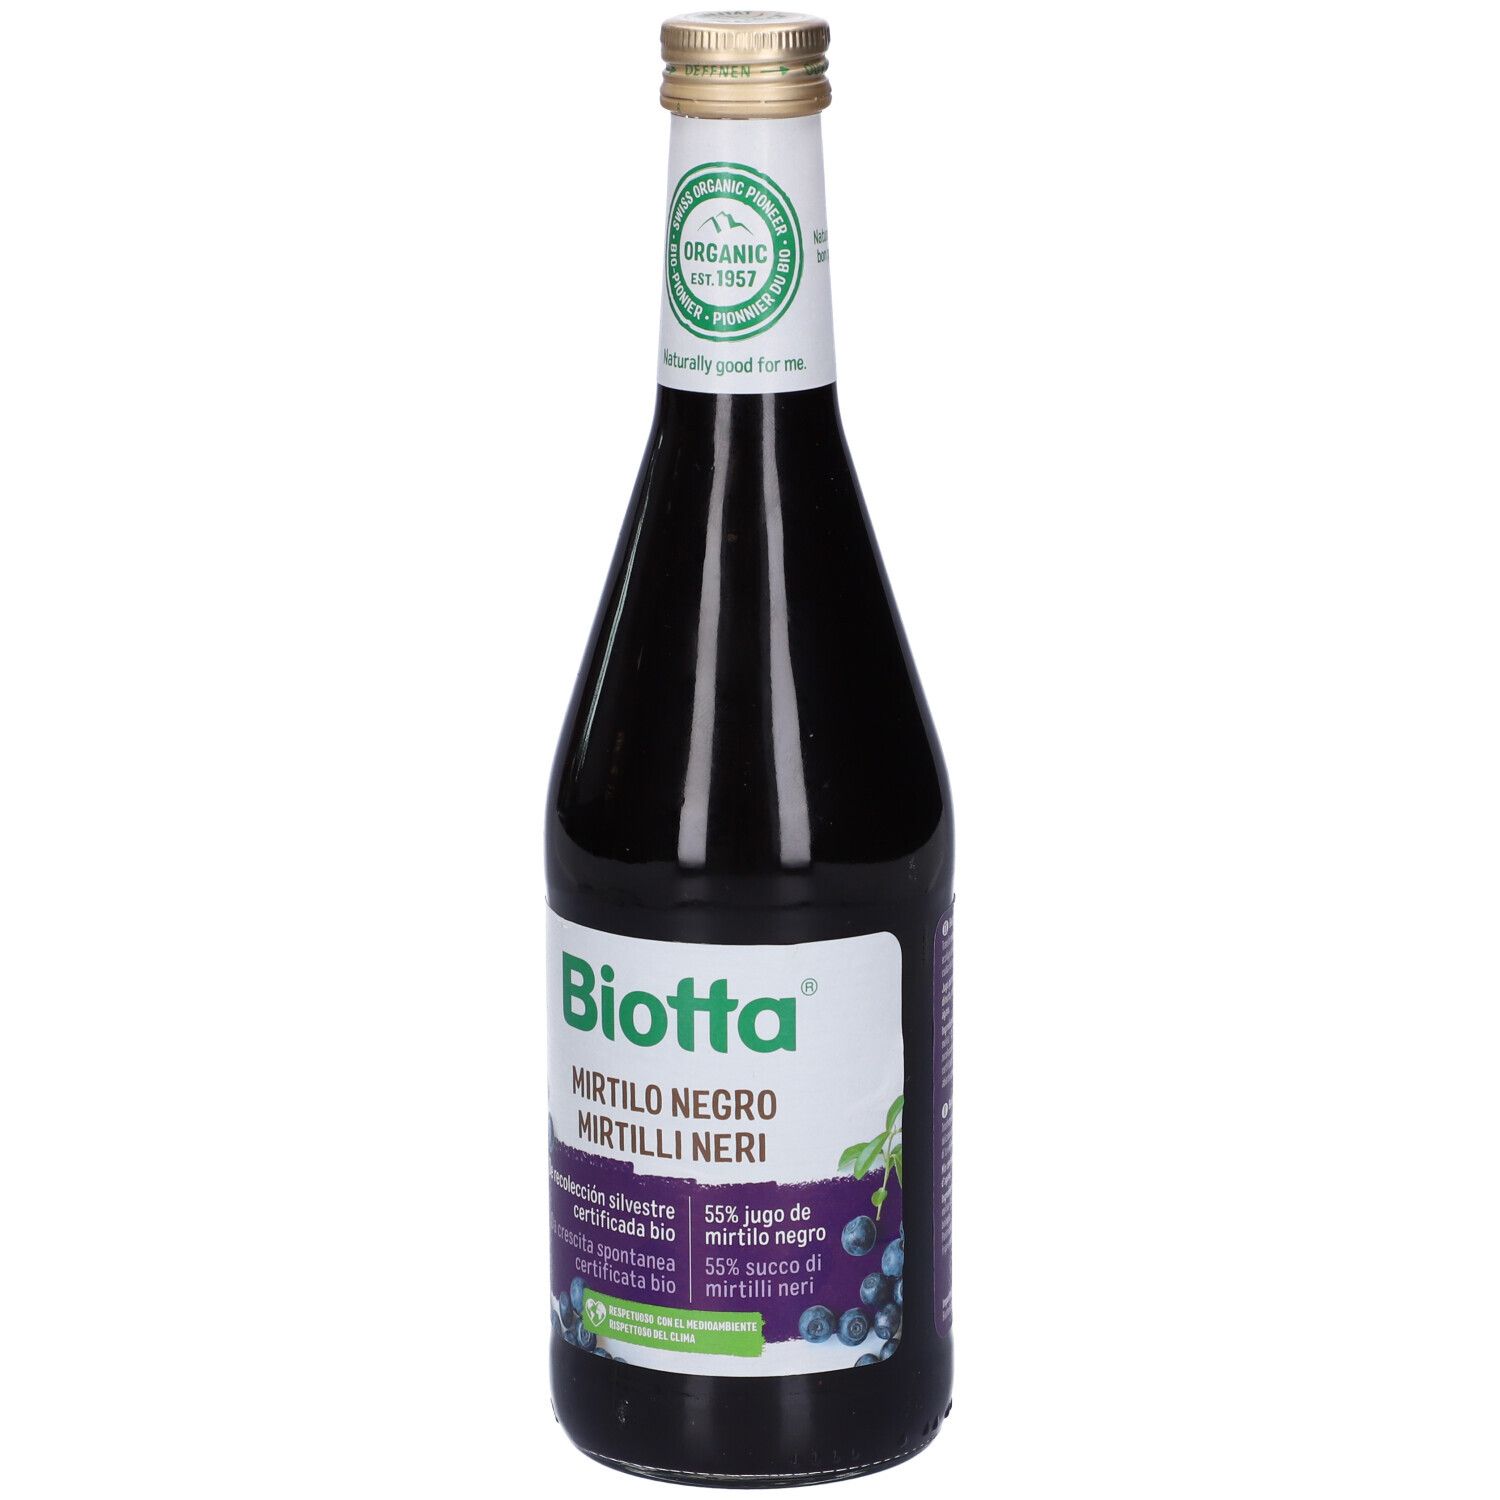 Biotta® Succo di Mirtilli Neri